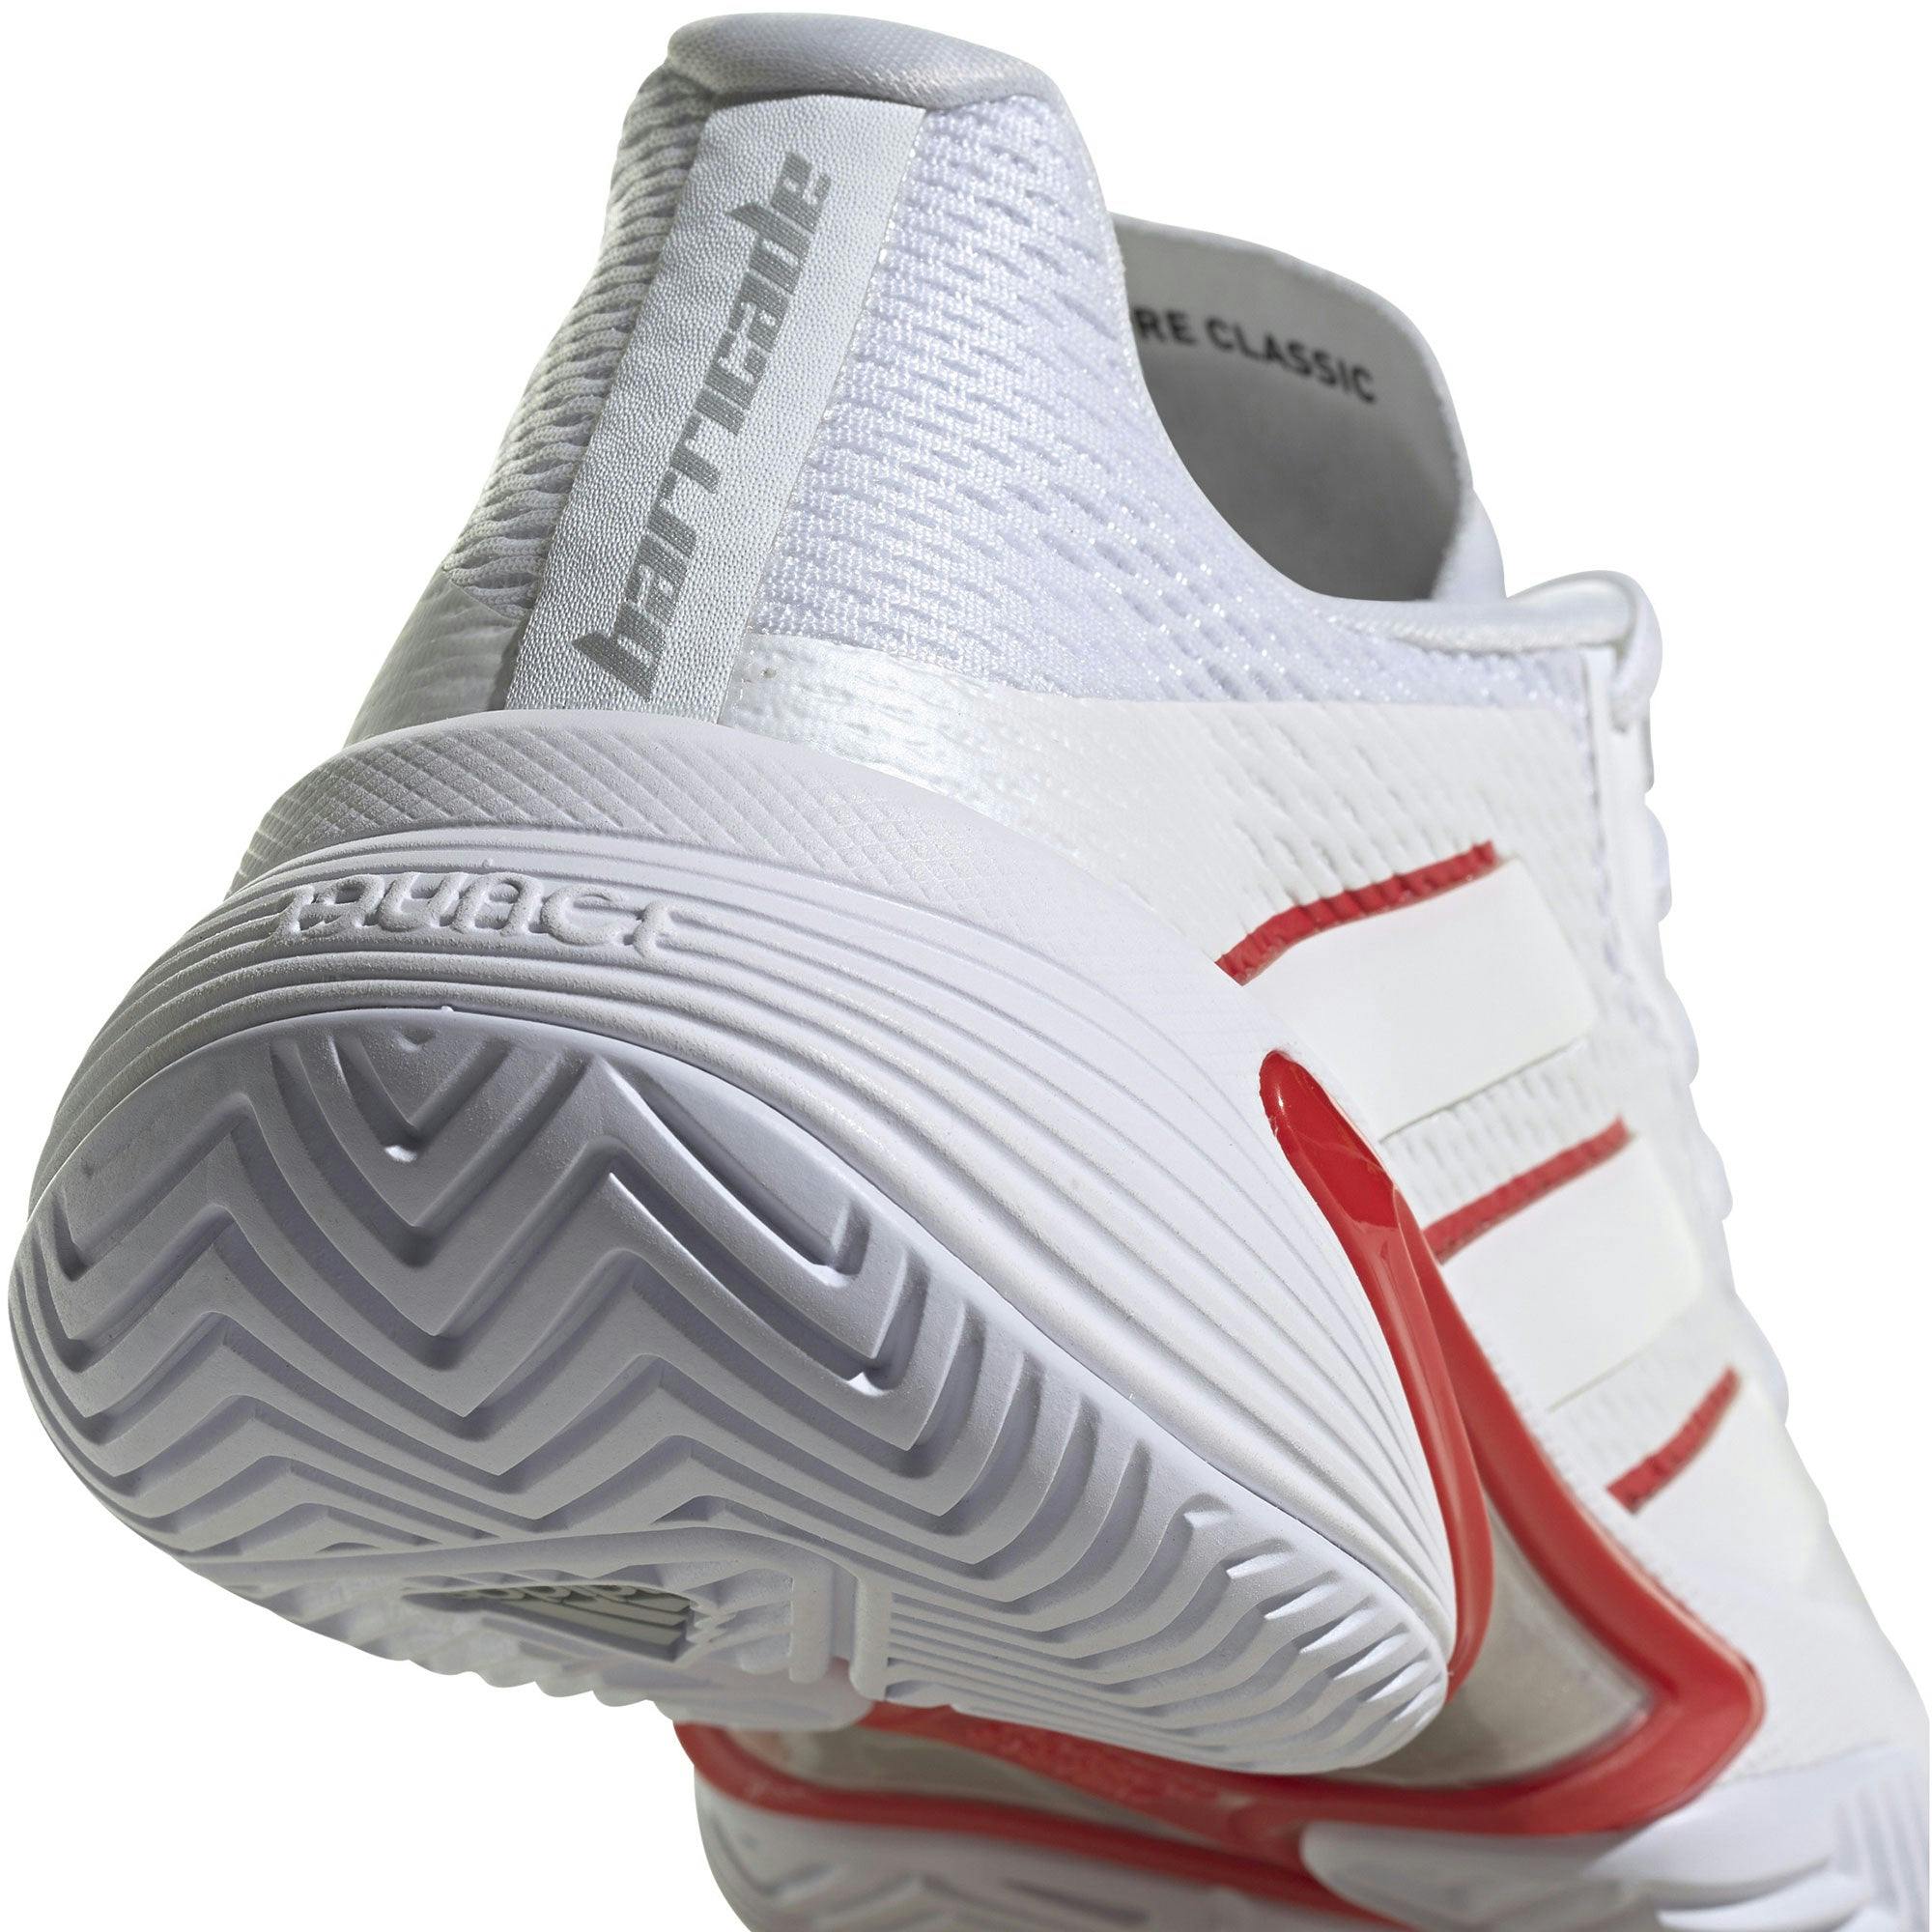 Adidas Barricade White-Silver Womens Tennis Shoes - WHT/SLVR/GY2 / B Medium / 7.0